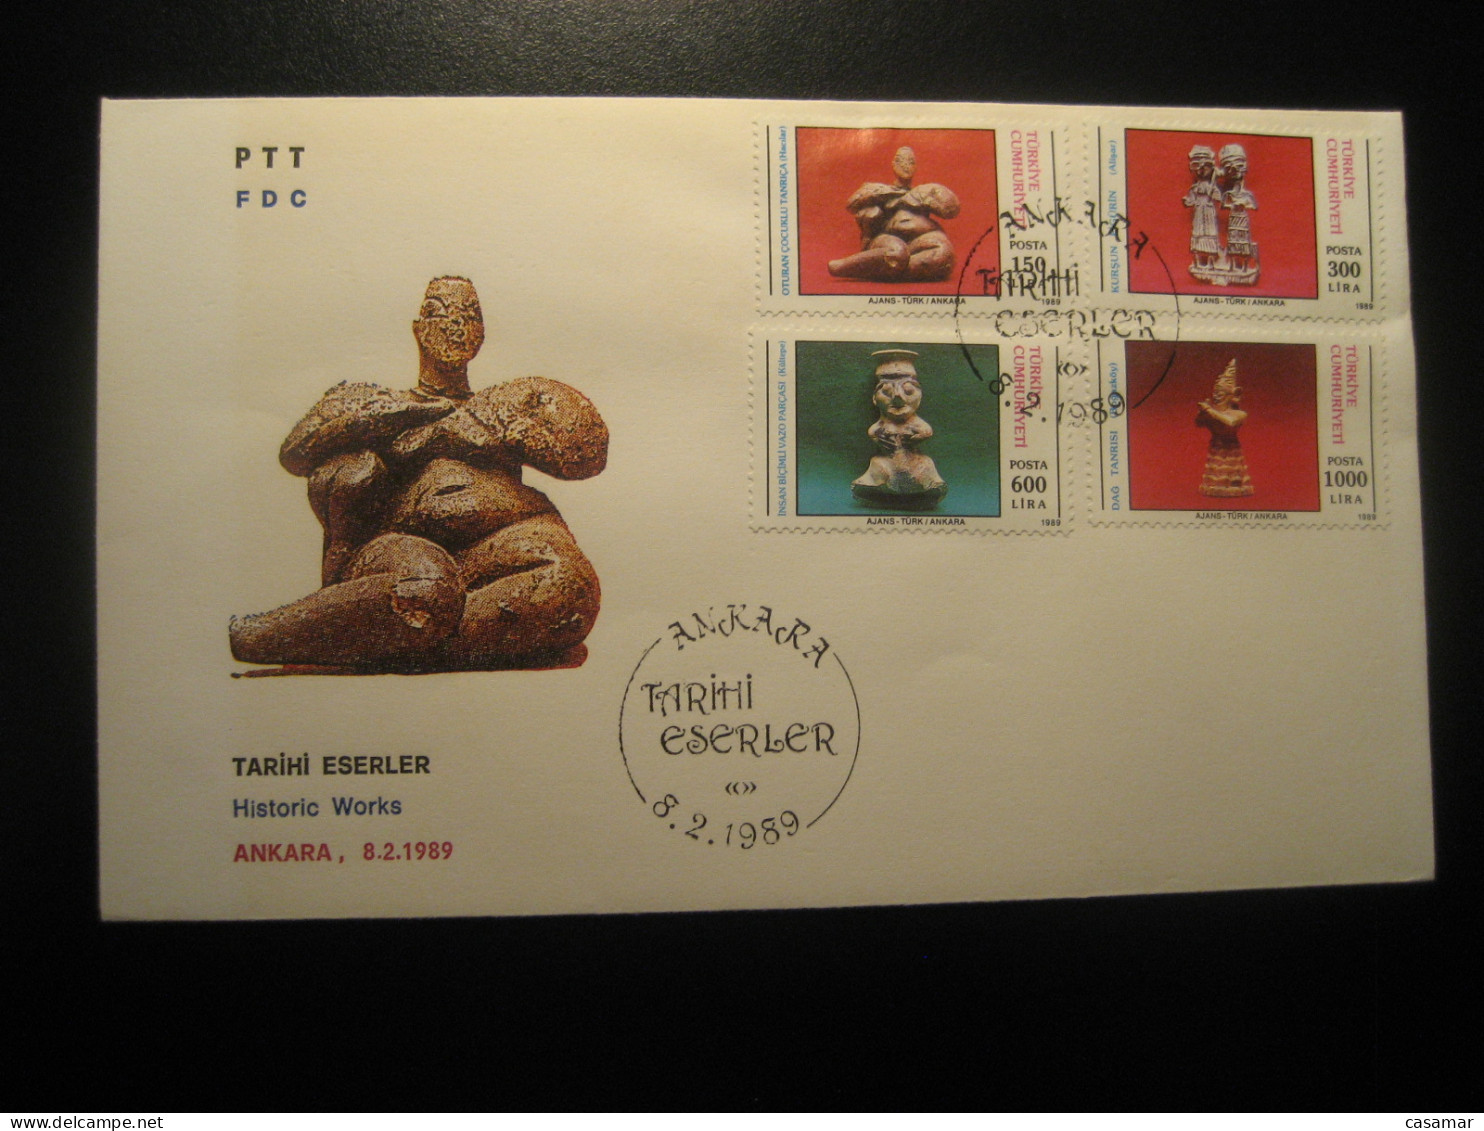 ANKARA 1989 Historic Works FDC Cancel Cover TURKEY - Storia Postale